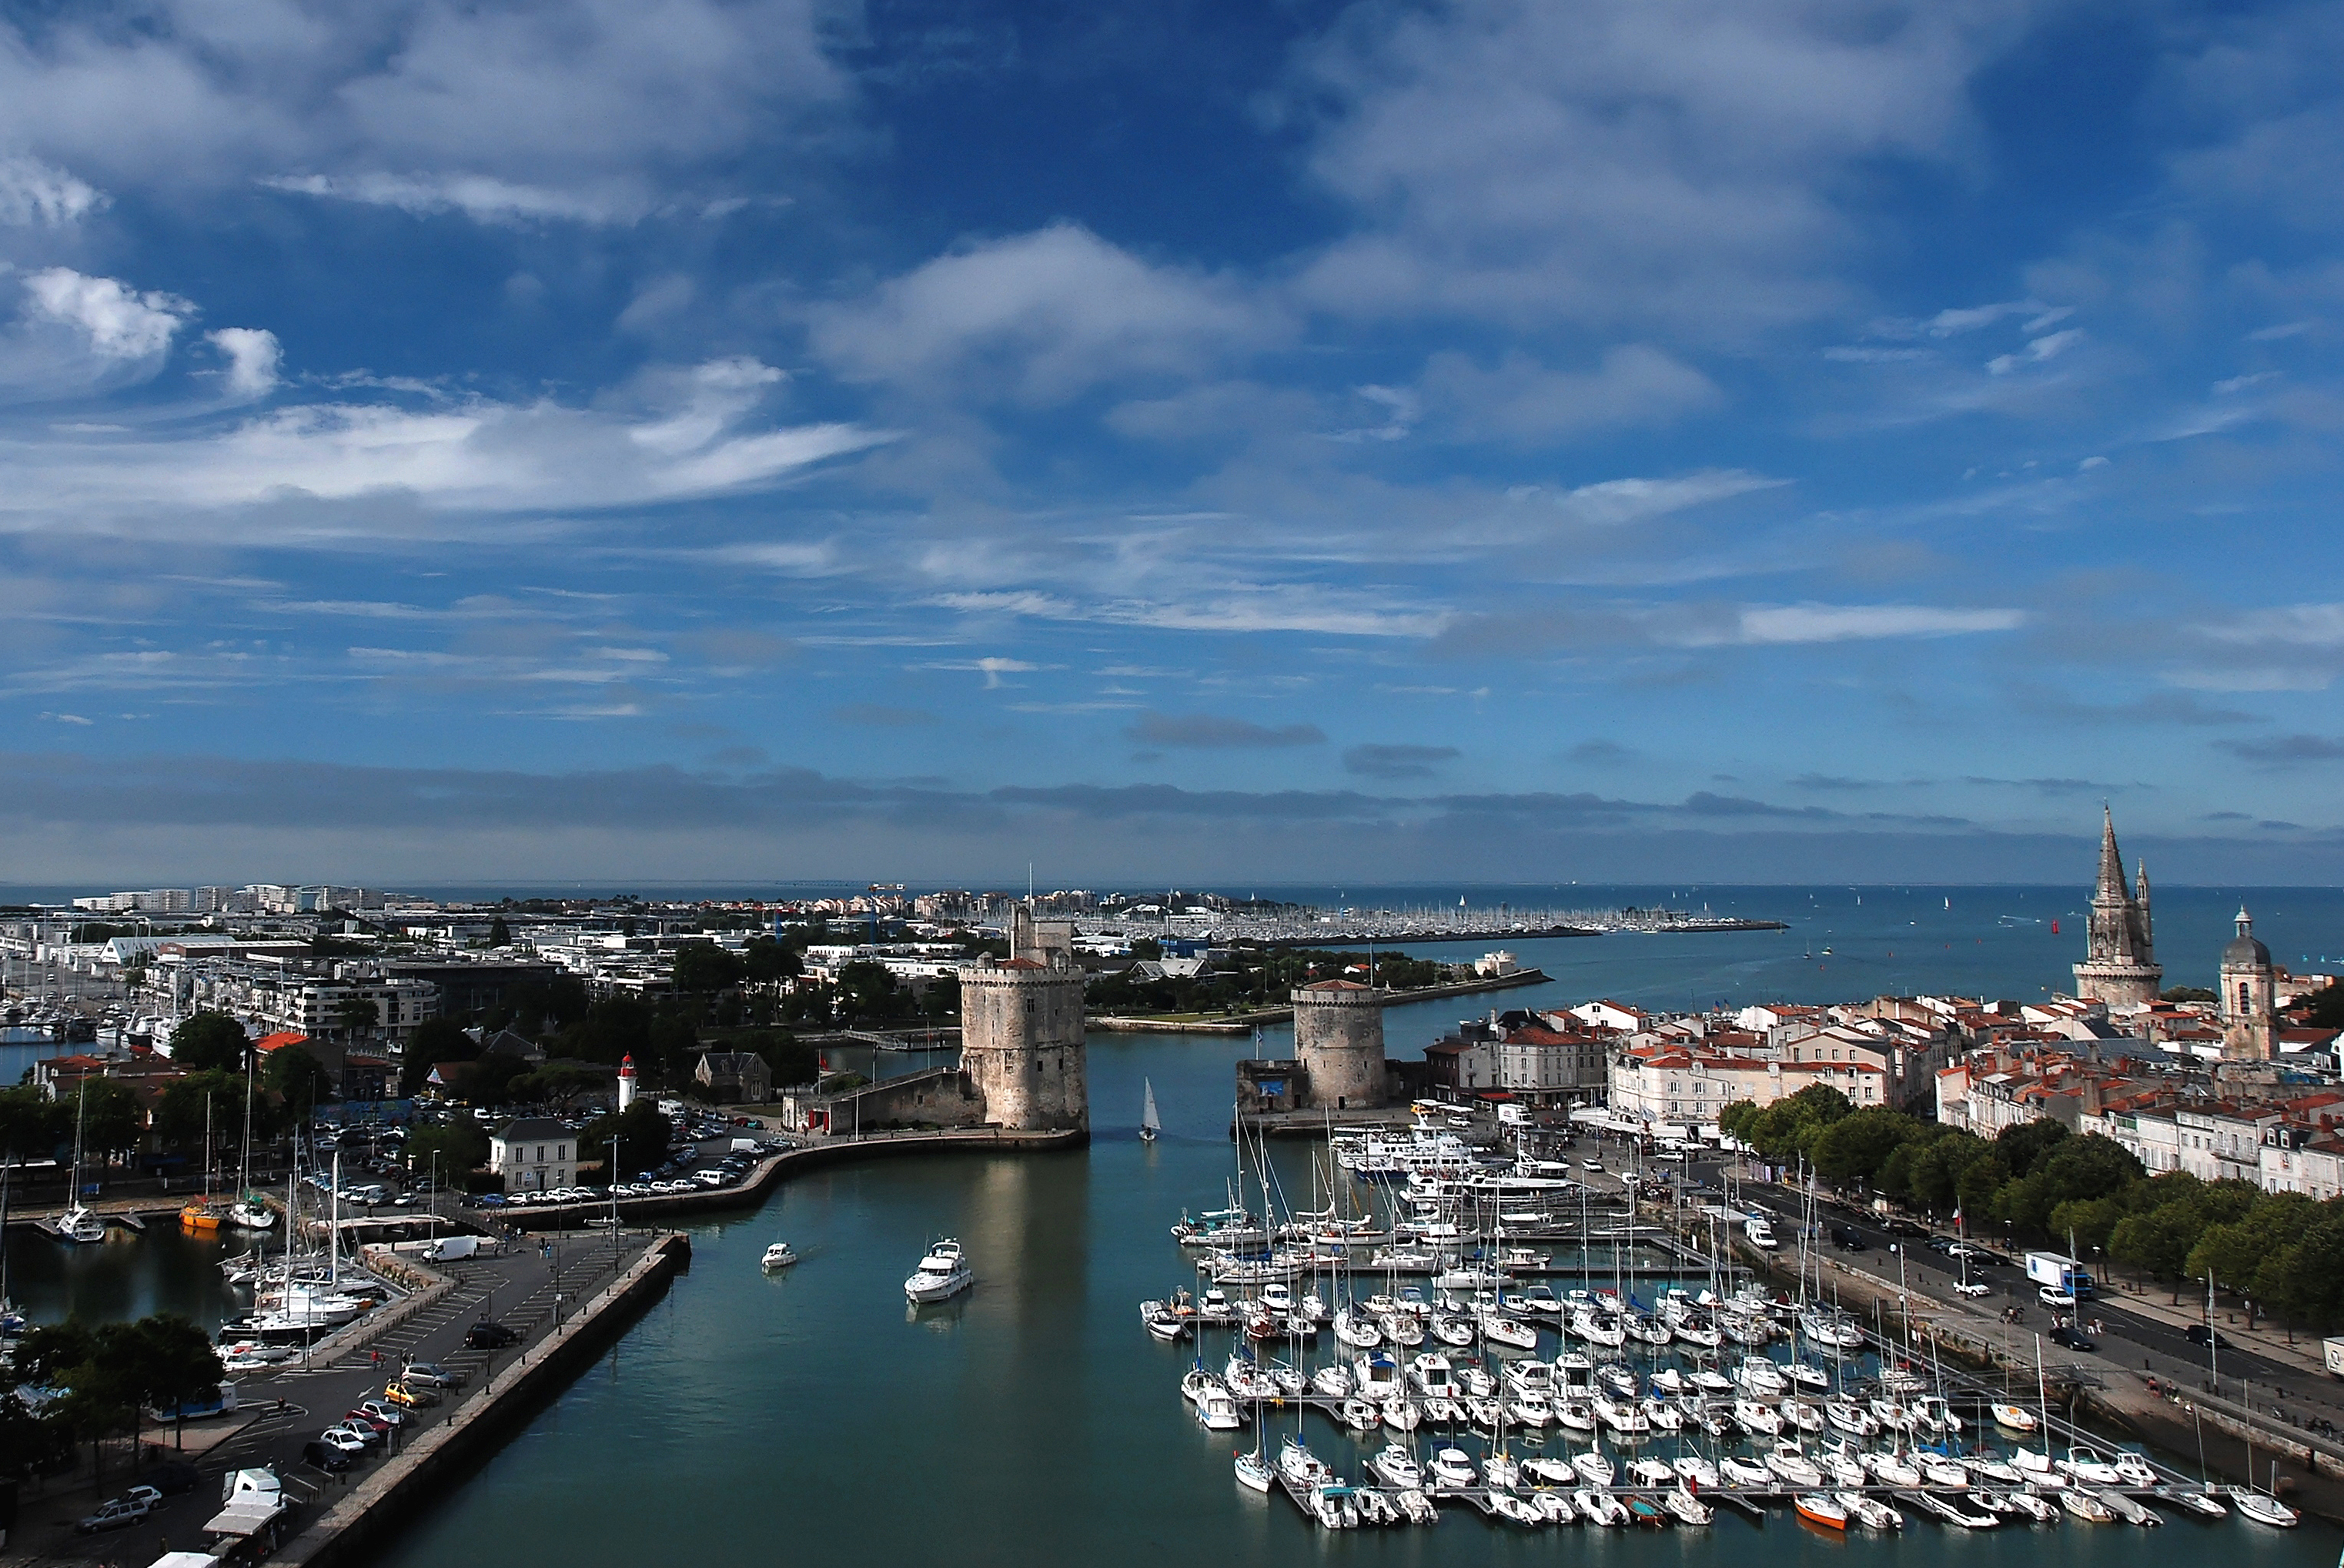 La Rochelle, the medieval port